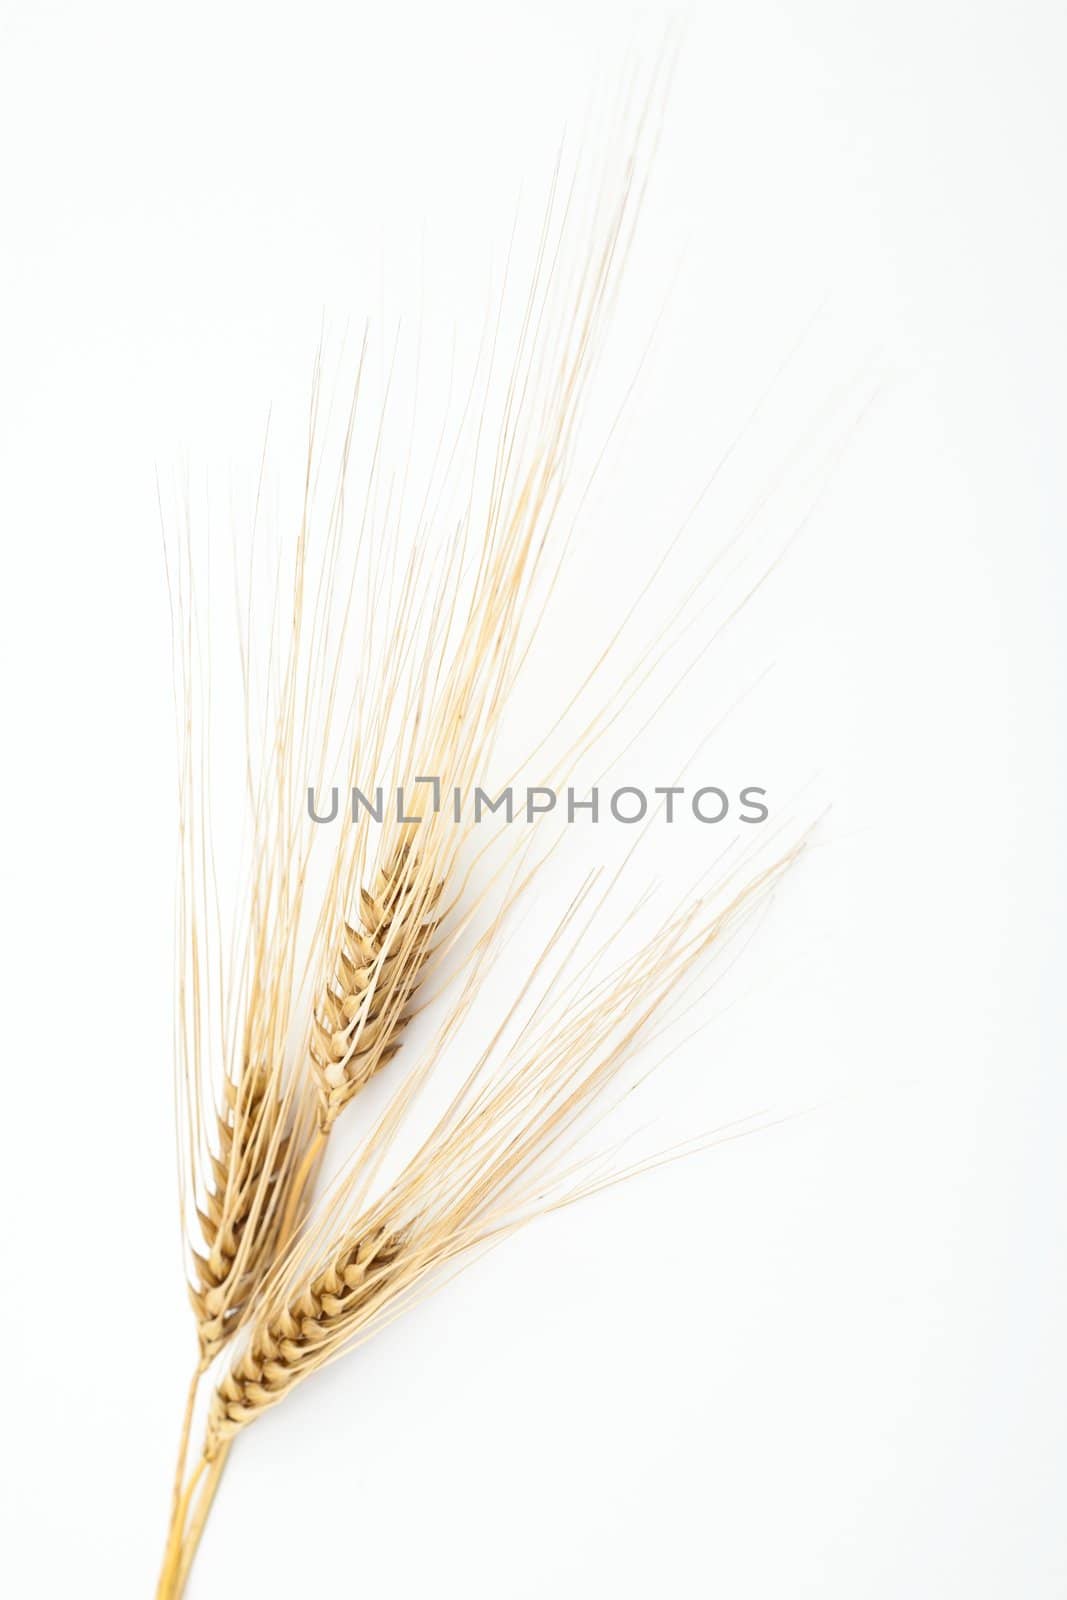 Ears of barley by velkol